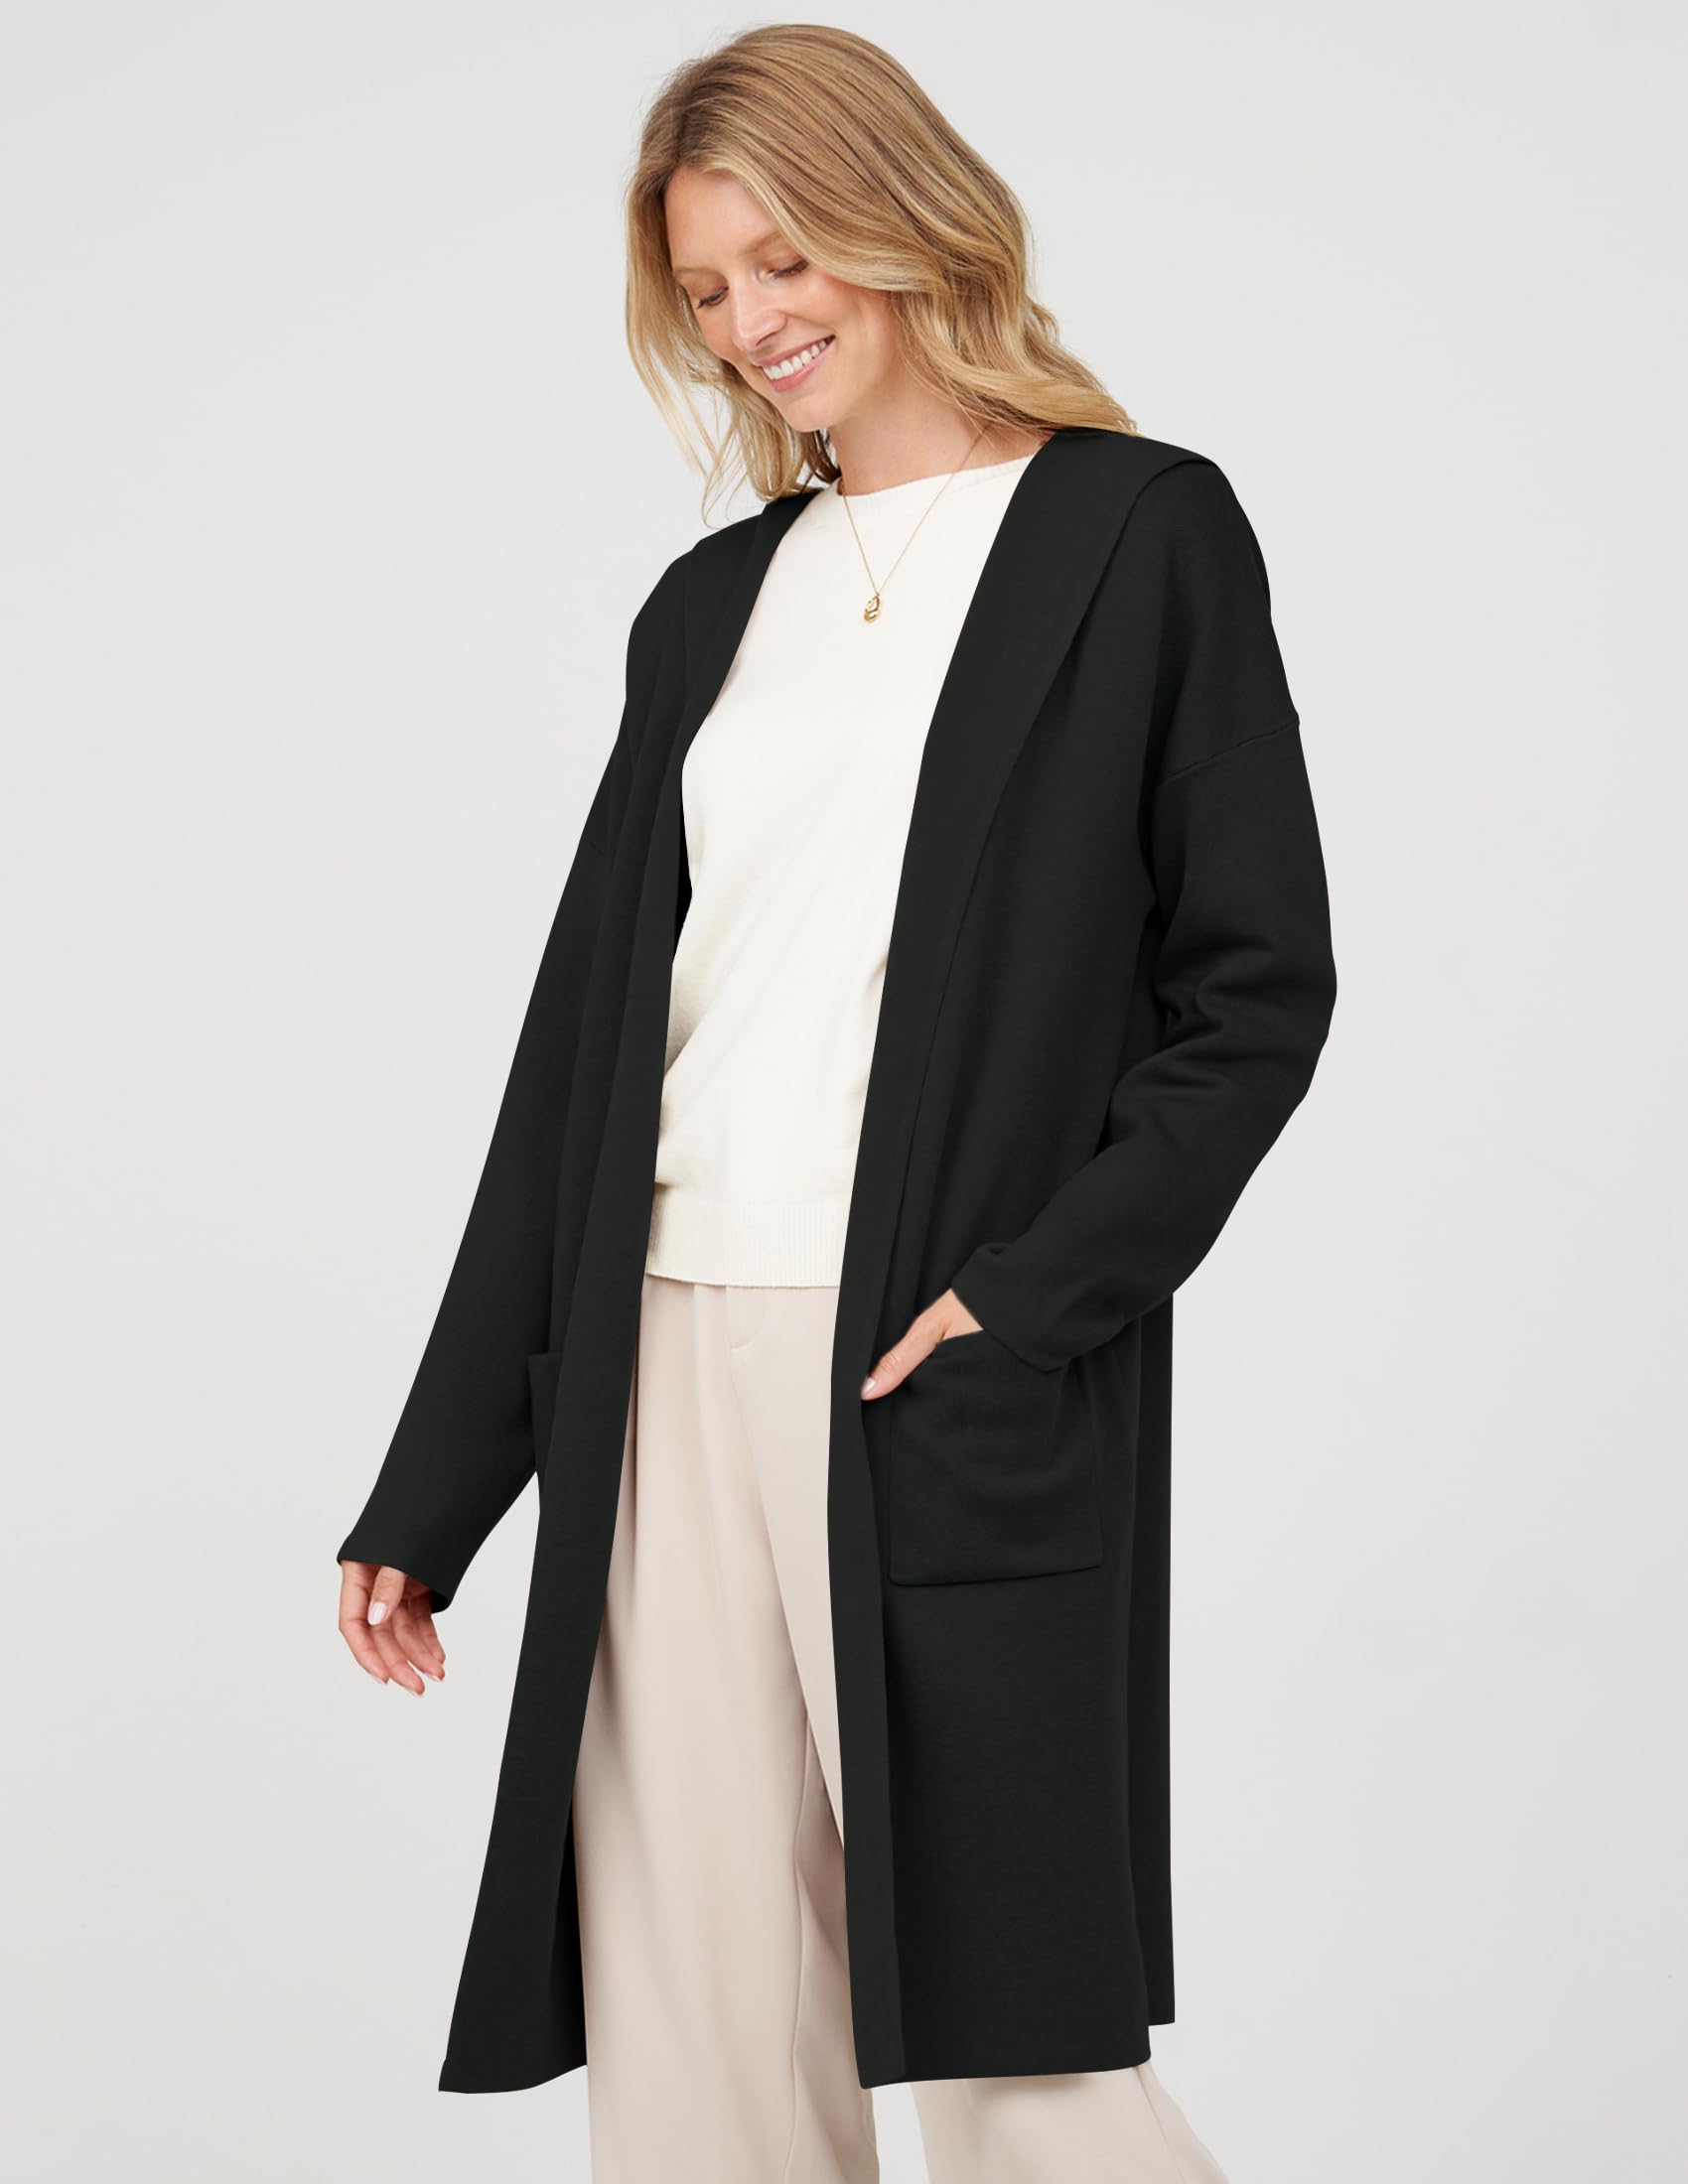 MEROKEETY Women's 2023 Long Sleeve Hooded Cardigan Dressy Open Front Knit Sweater Coat with Pockets